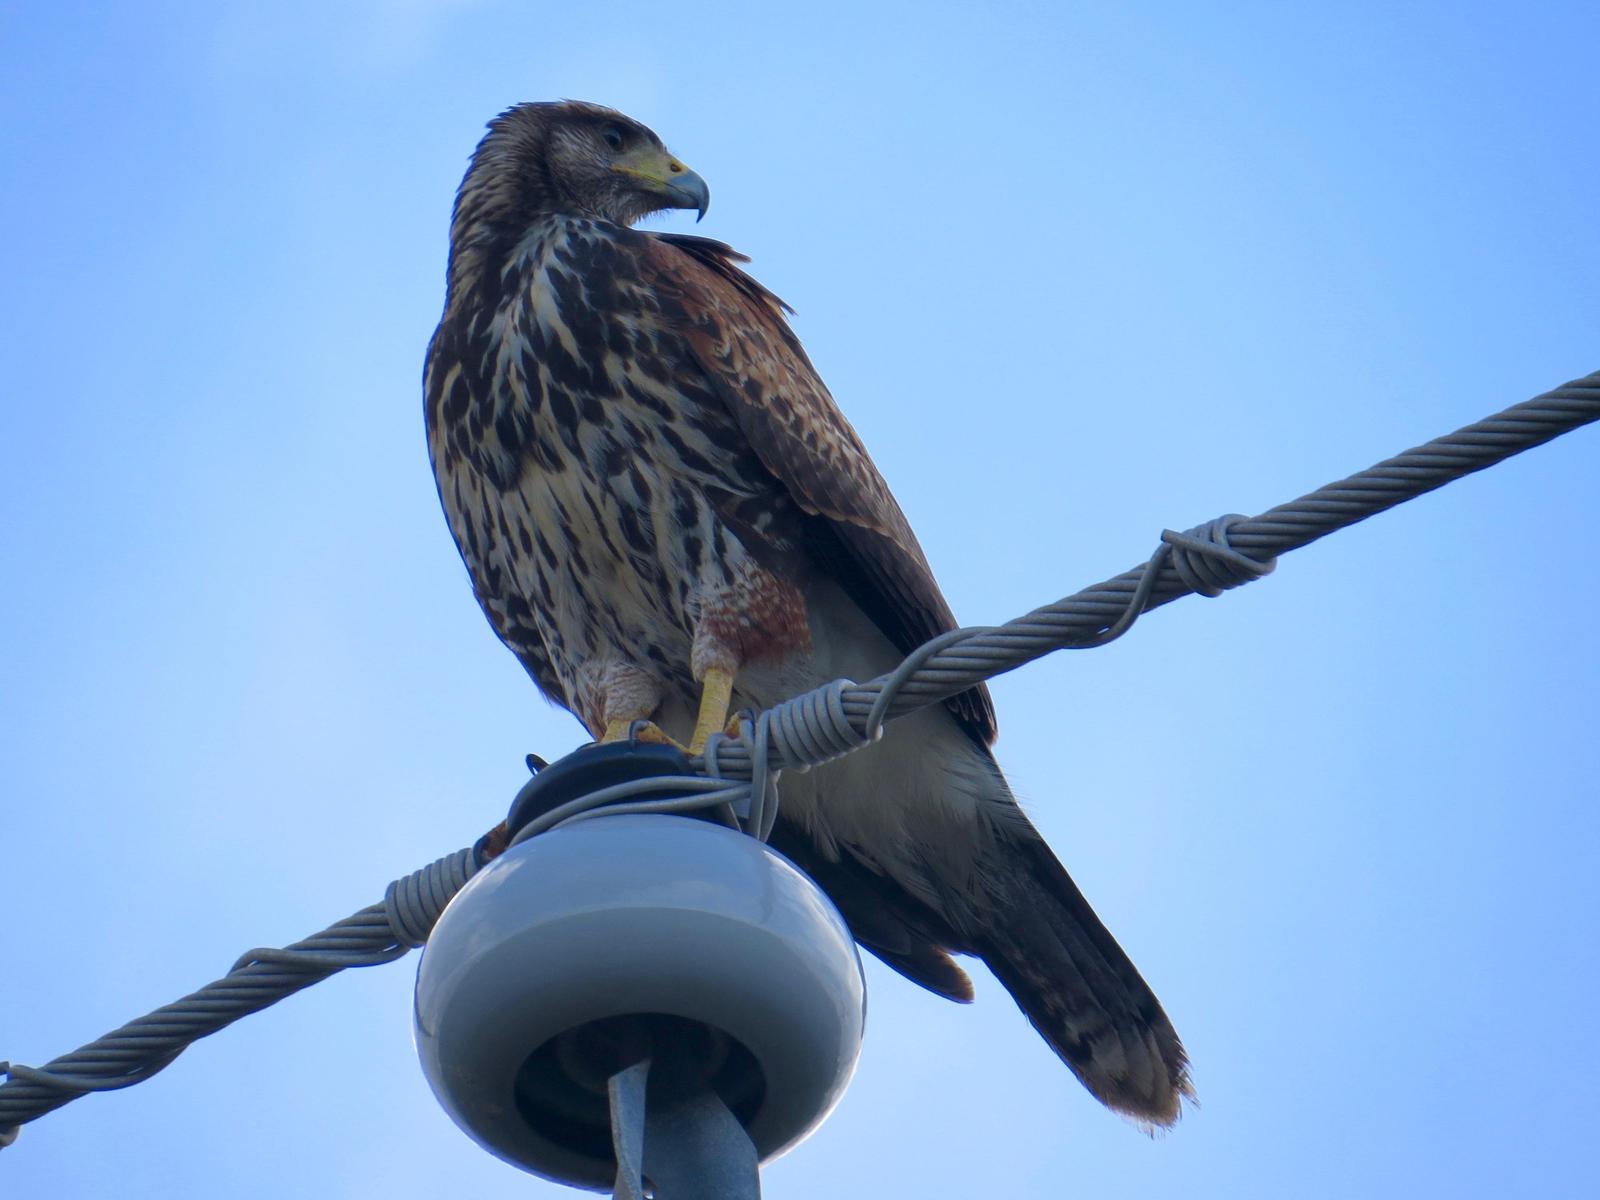 Harris's Hawk Photo by Don Glasco